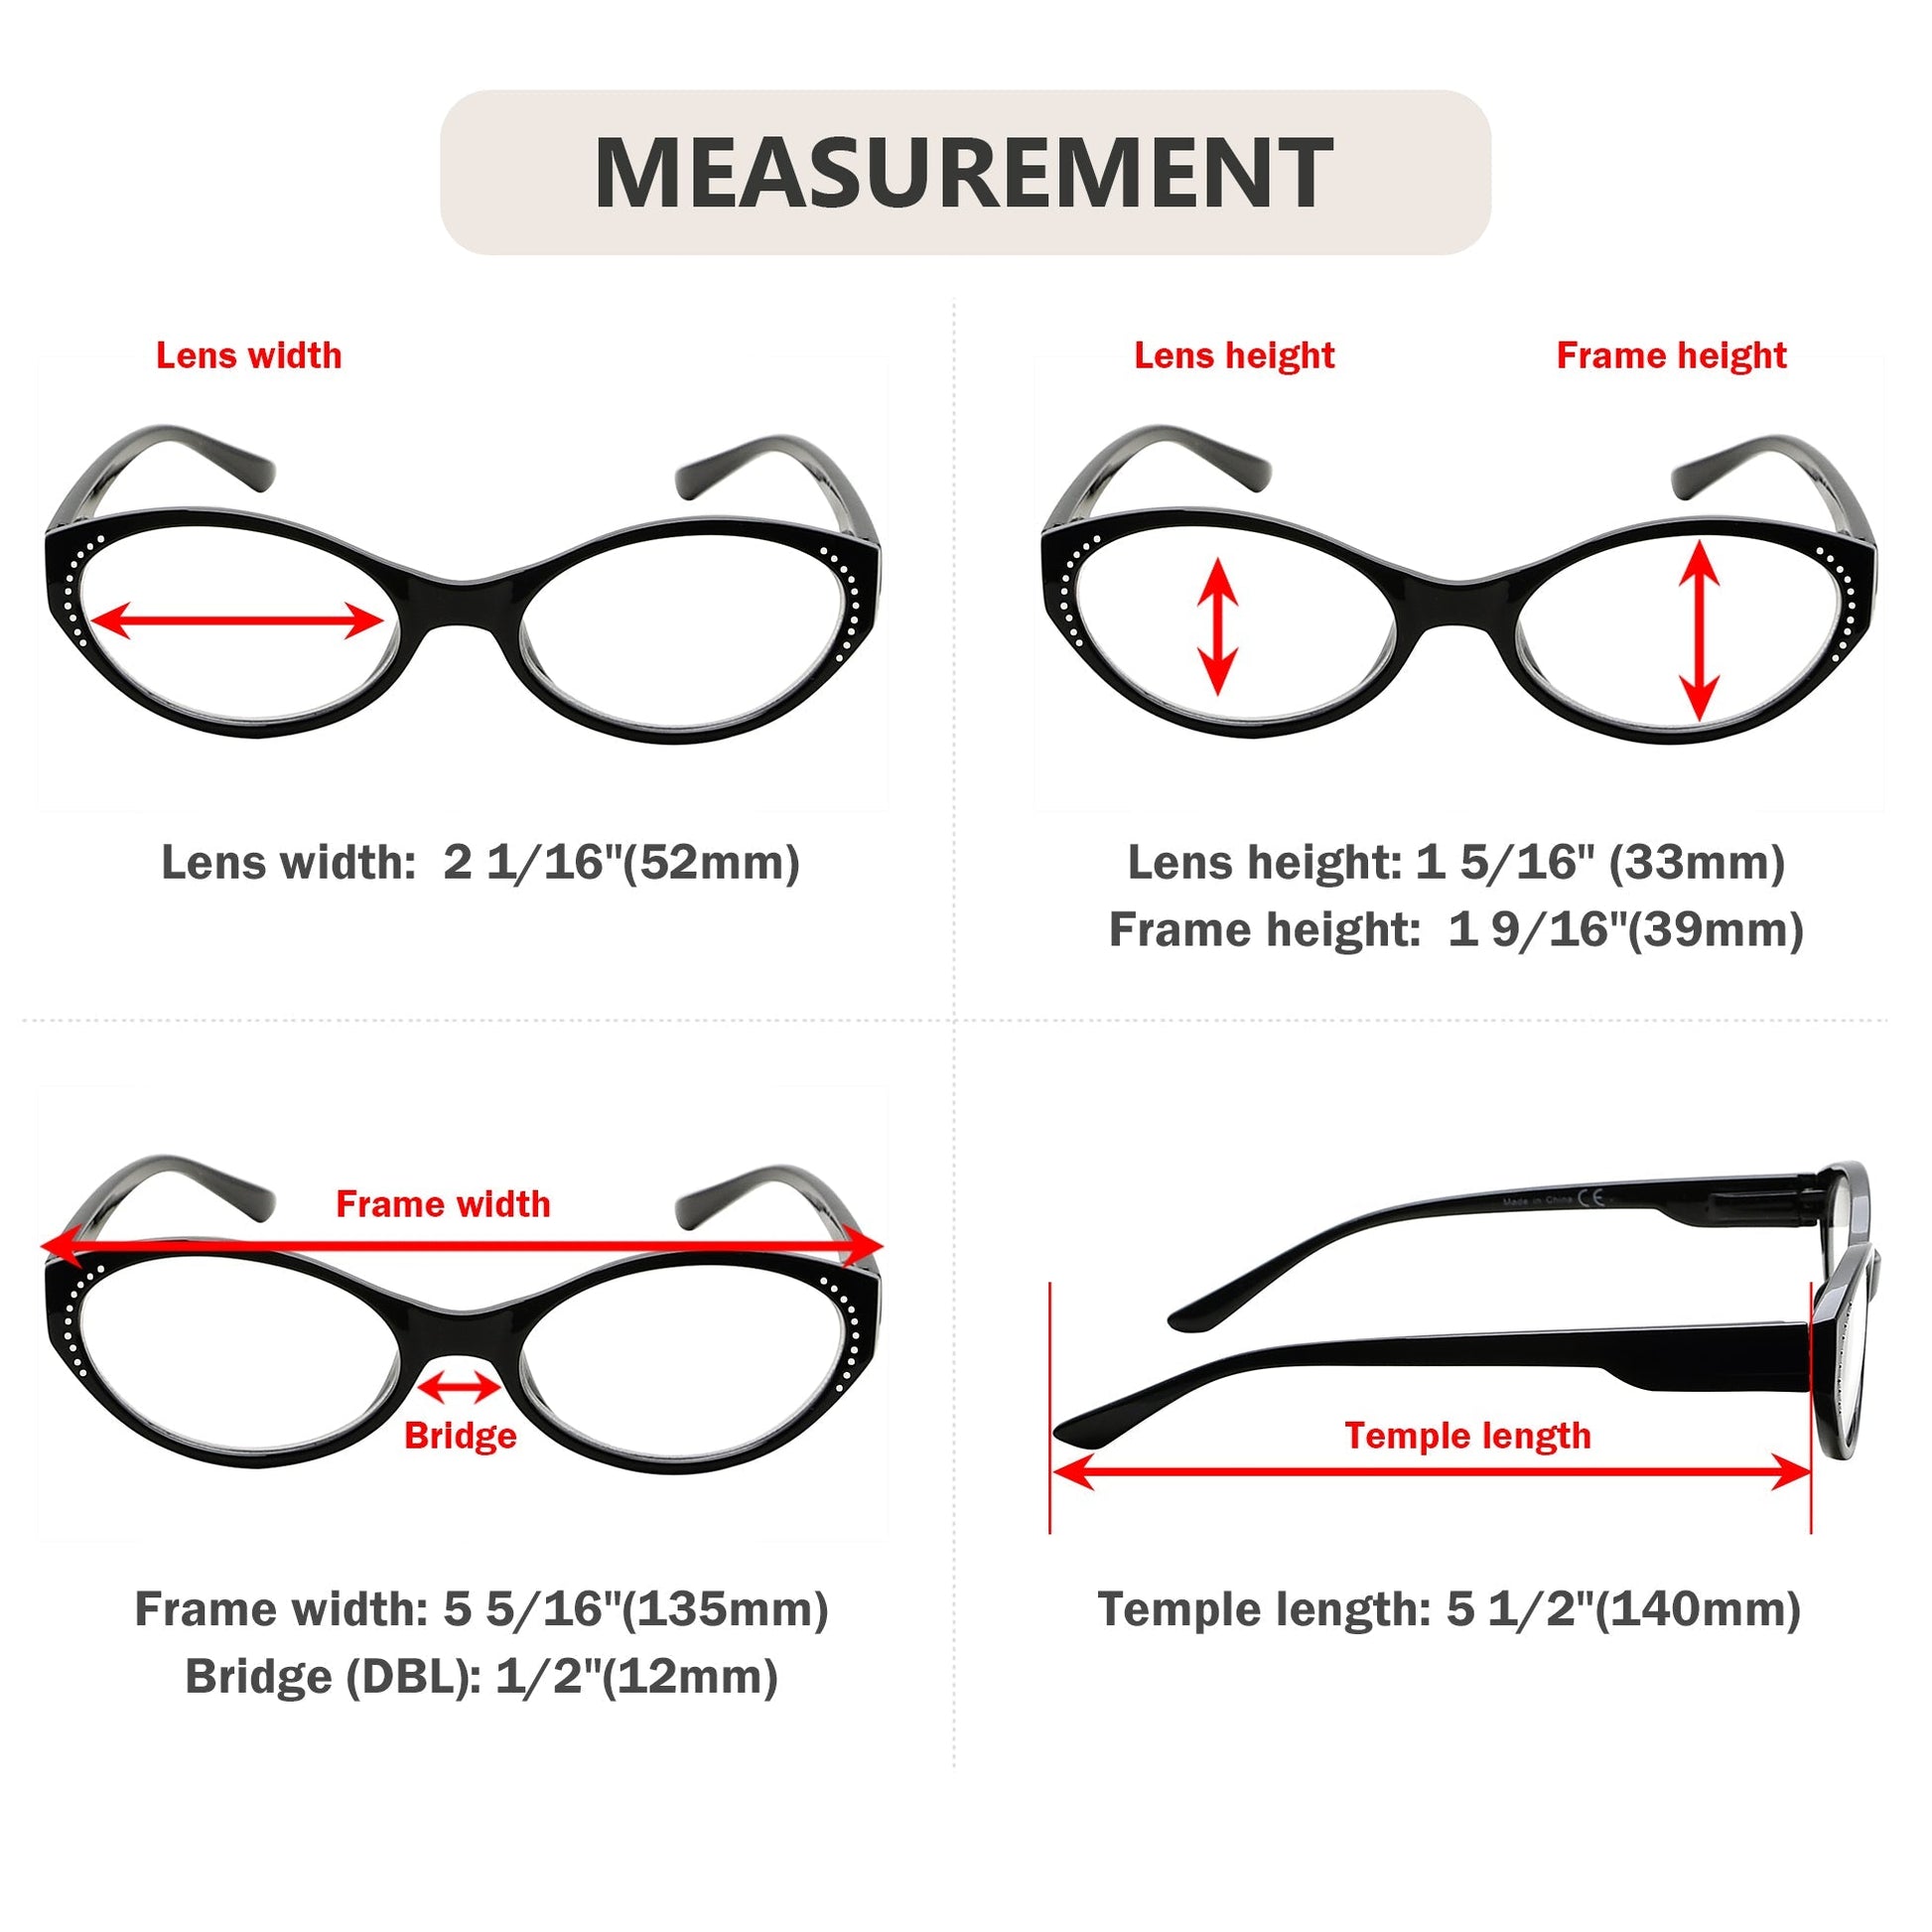 4 Pack Oval Classic Design Reading Glasses For Women R2036